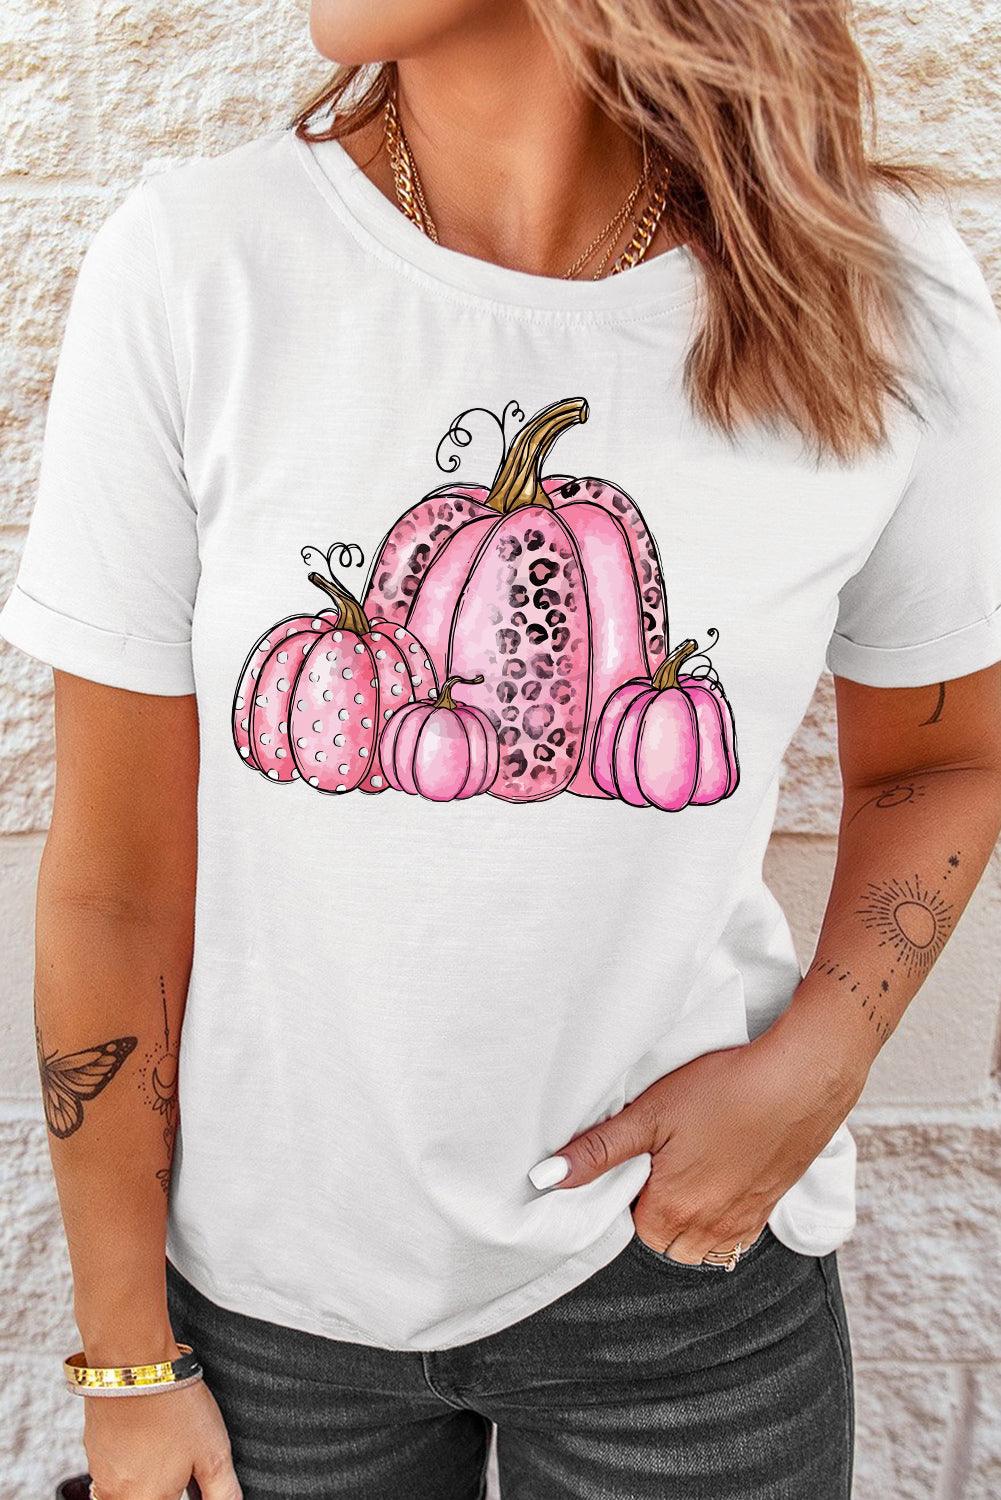 Howdy Fall Cow Pumpkin Print Graphic T Shirt - L & M Kee, LLC